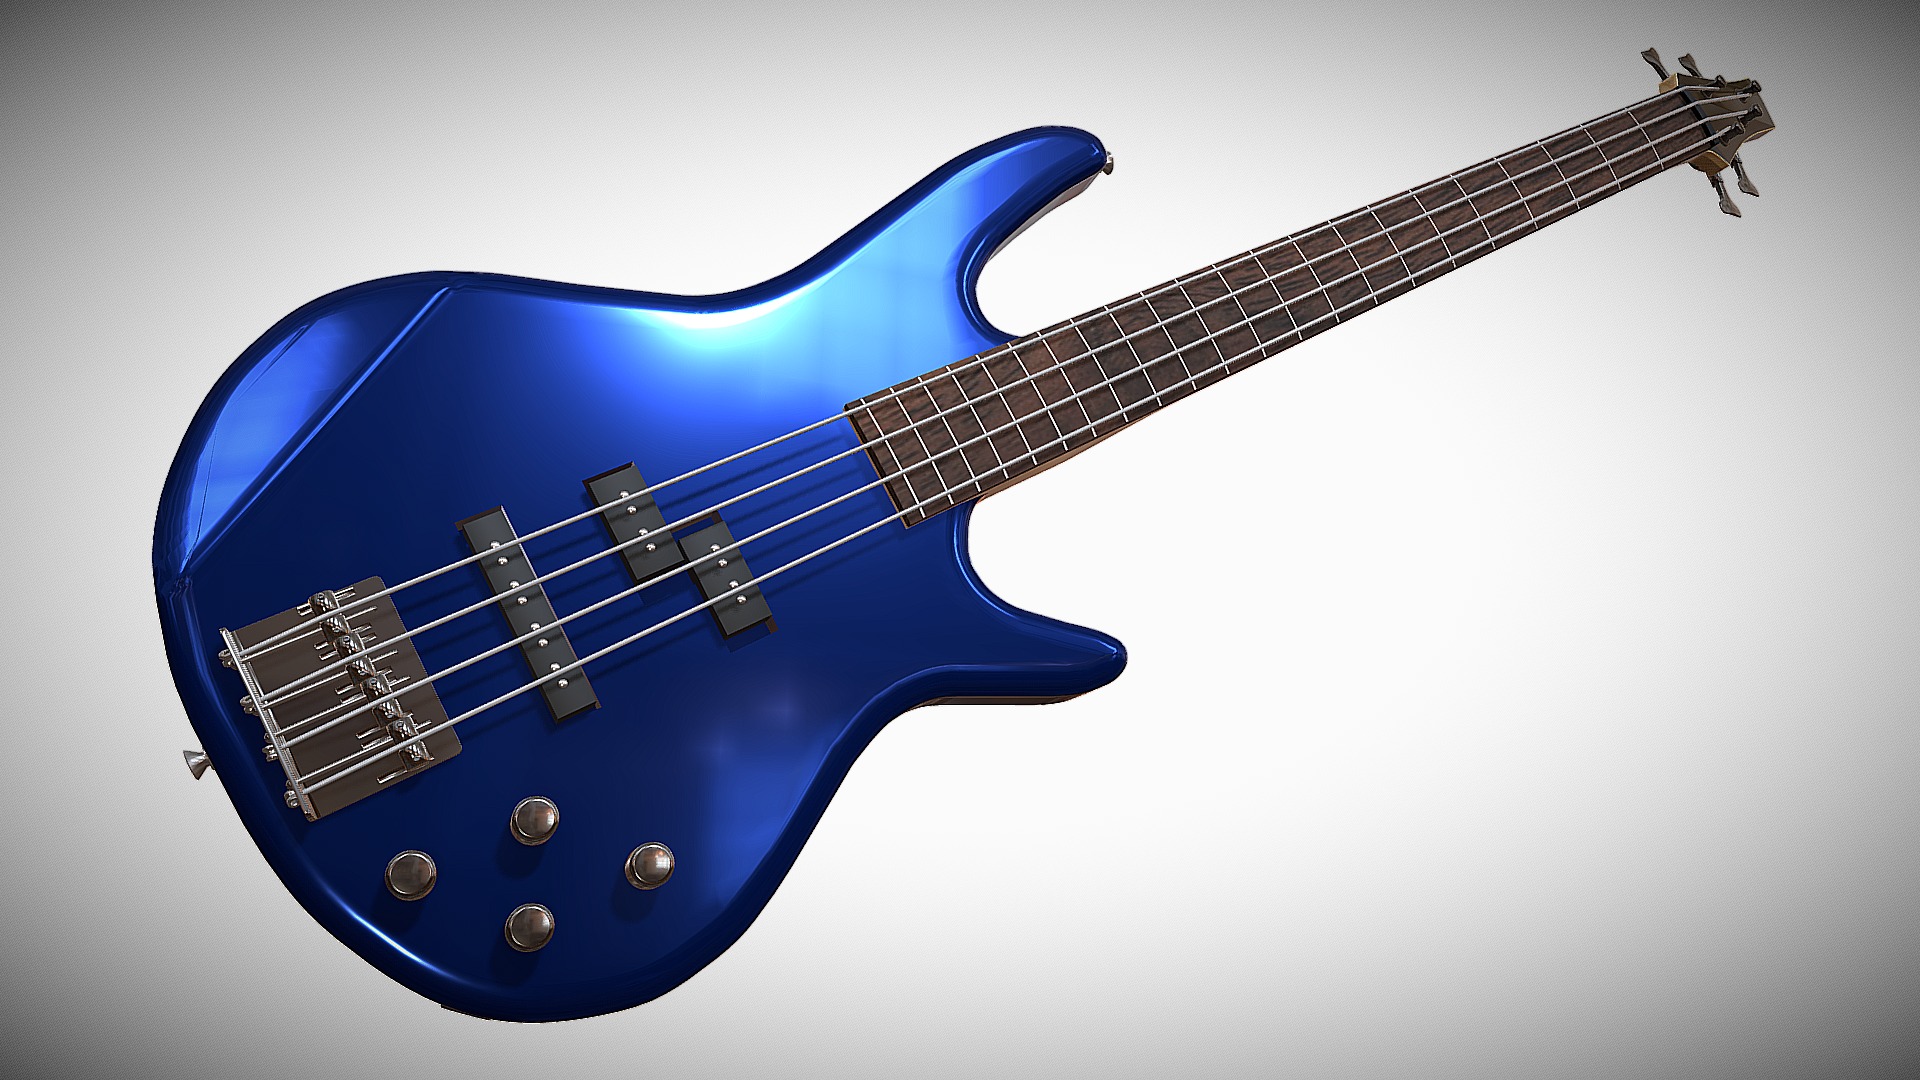 3D model BAJO / BASS GUITAR - This is a 3D model of the BAJO / BASS GUITAR. The 3D model is about a blue electric guitar.